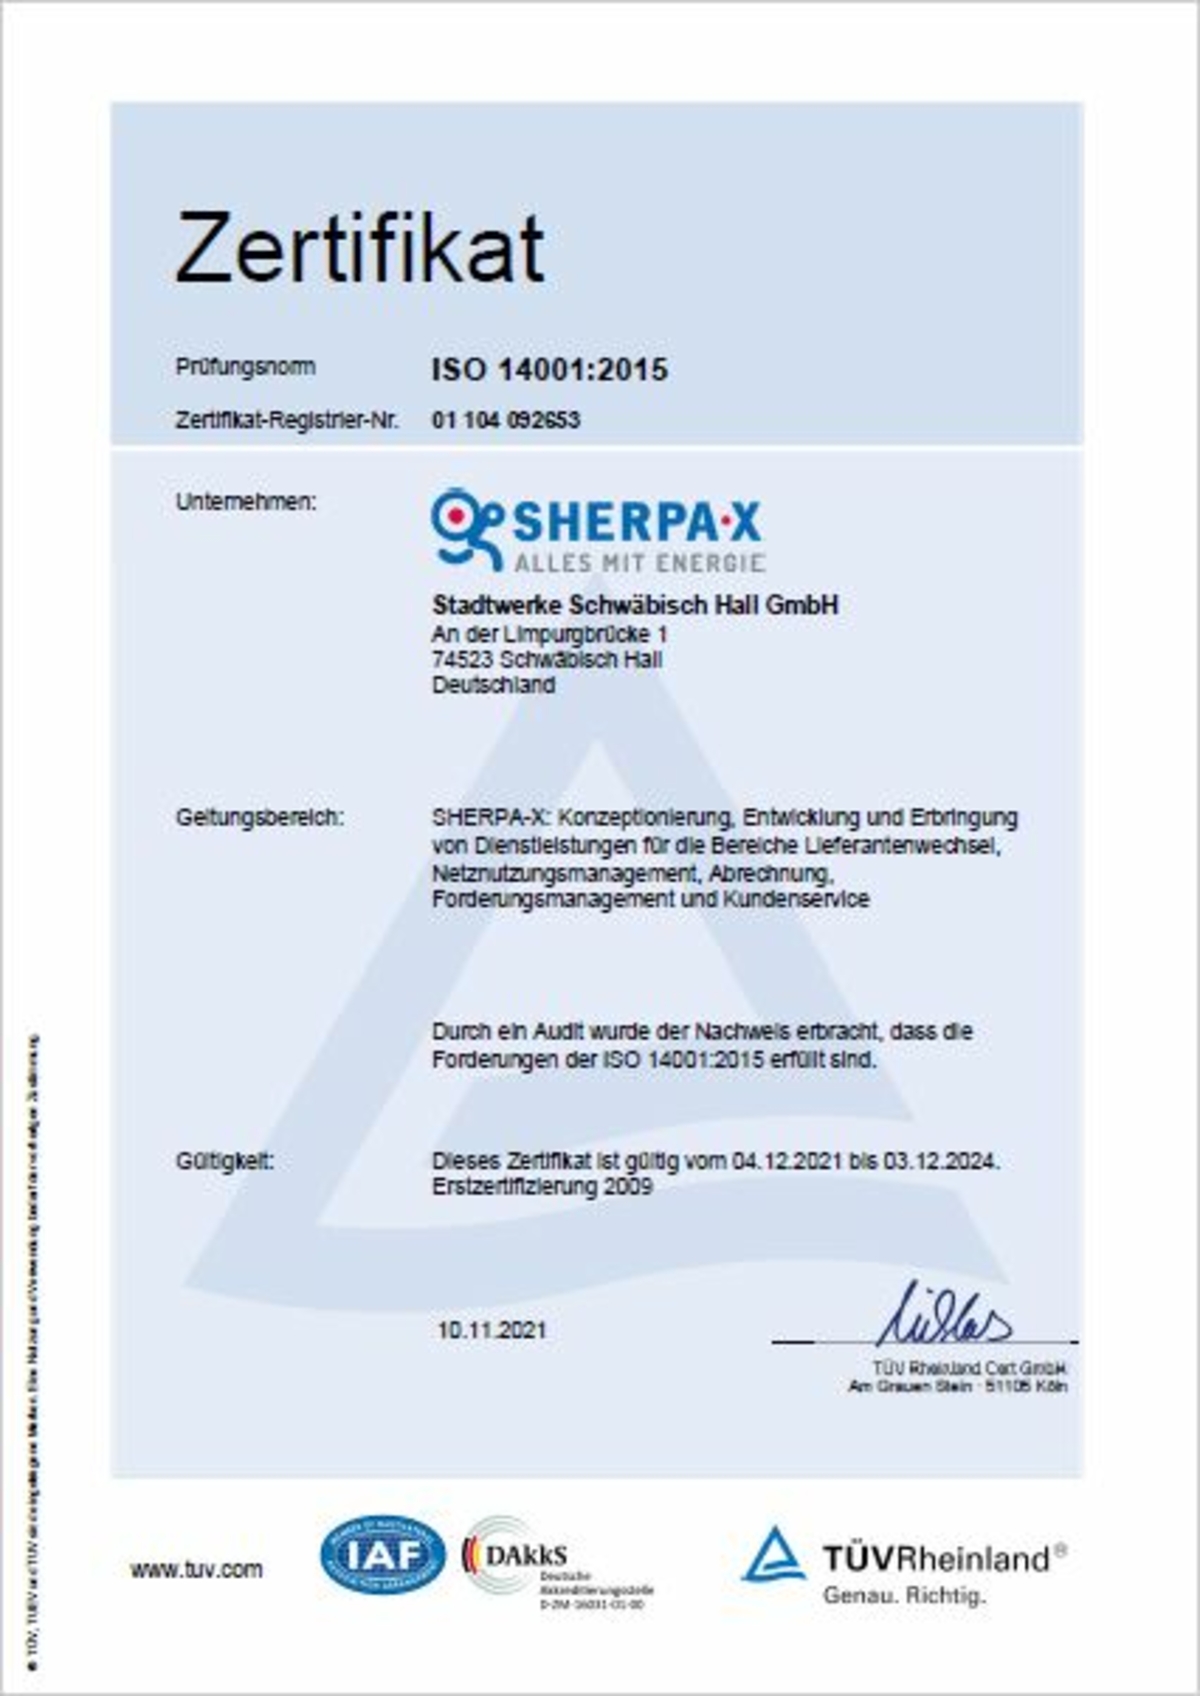 csm_Zertifikat_ISO14001_2015_SHERPA-X_20241203_ddedc87182